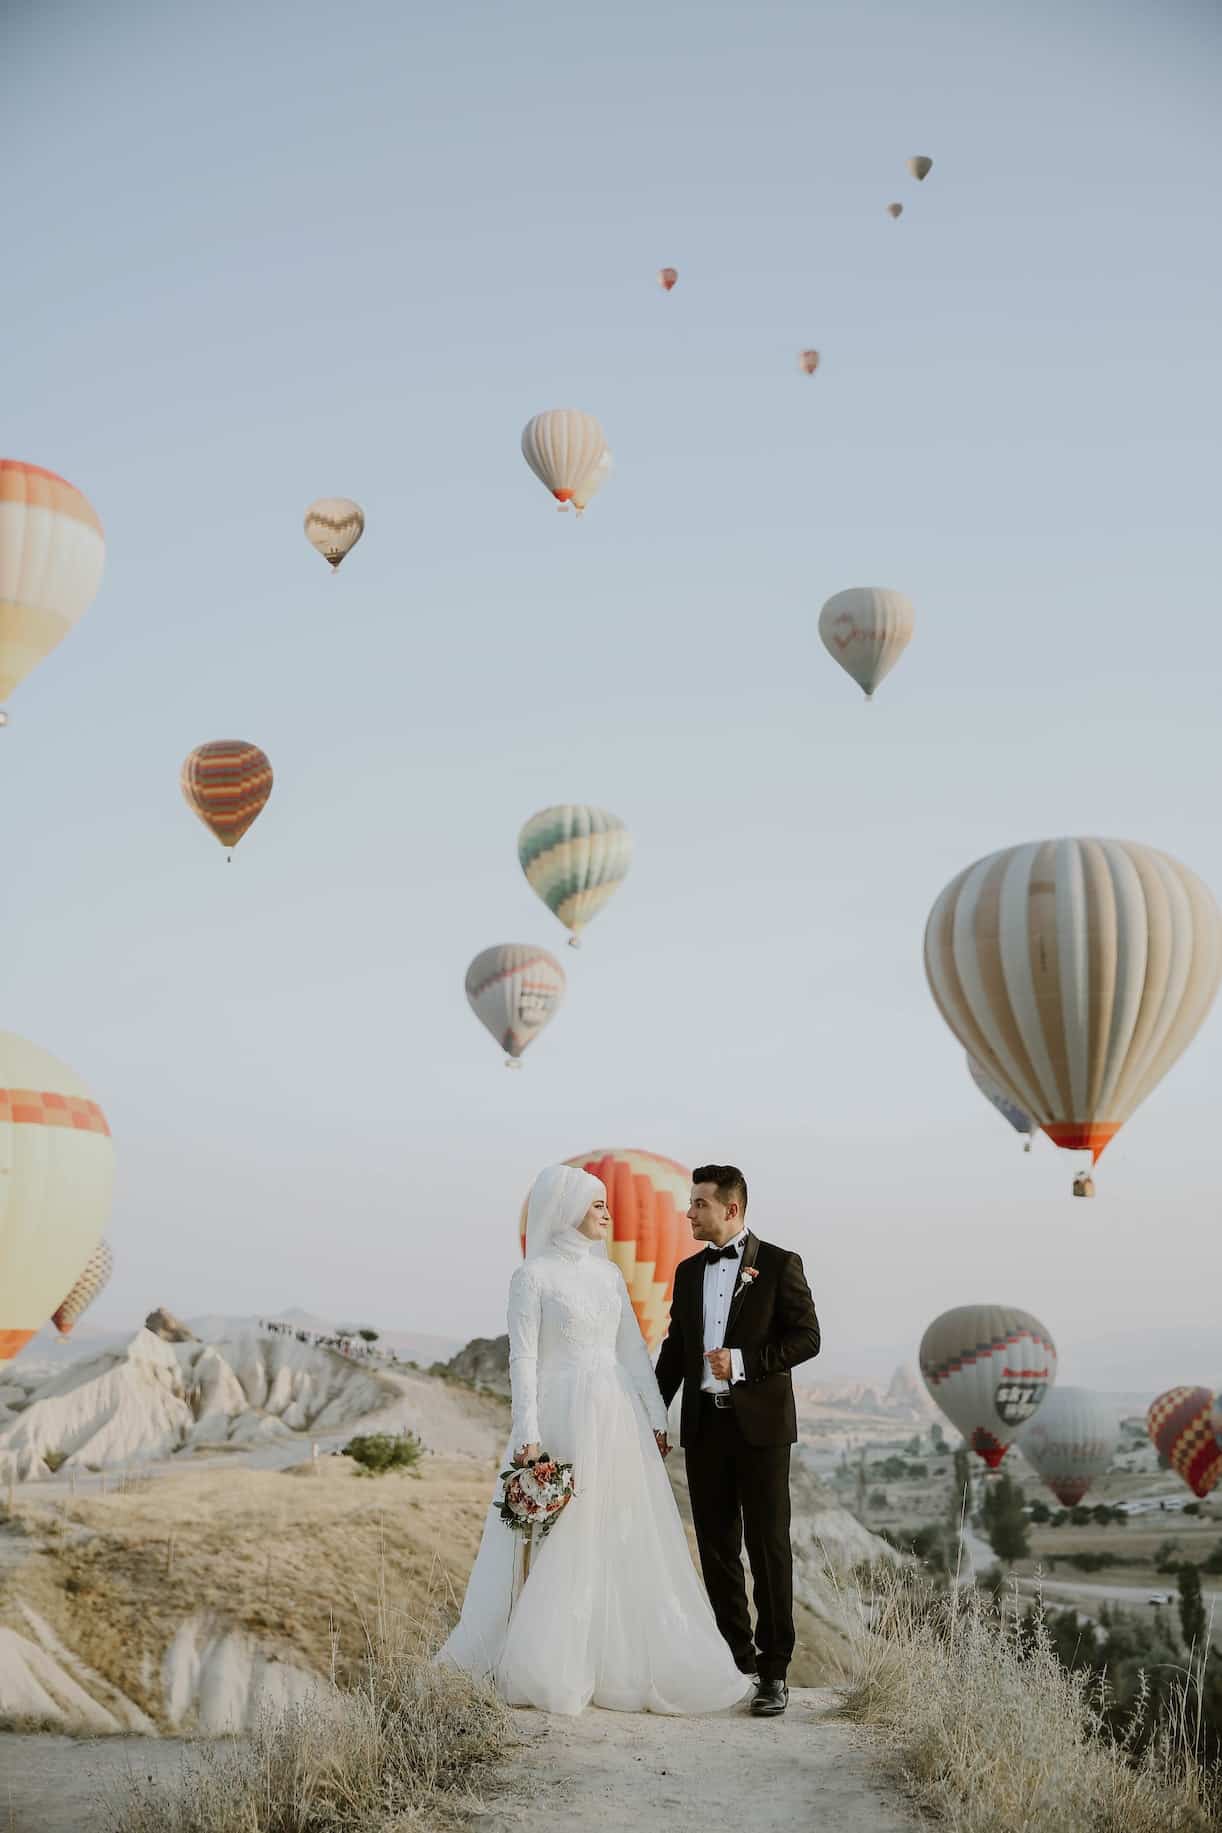 Couple Destination Wedding with Hot Air Balloons